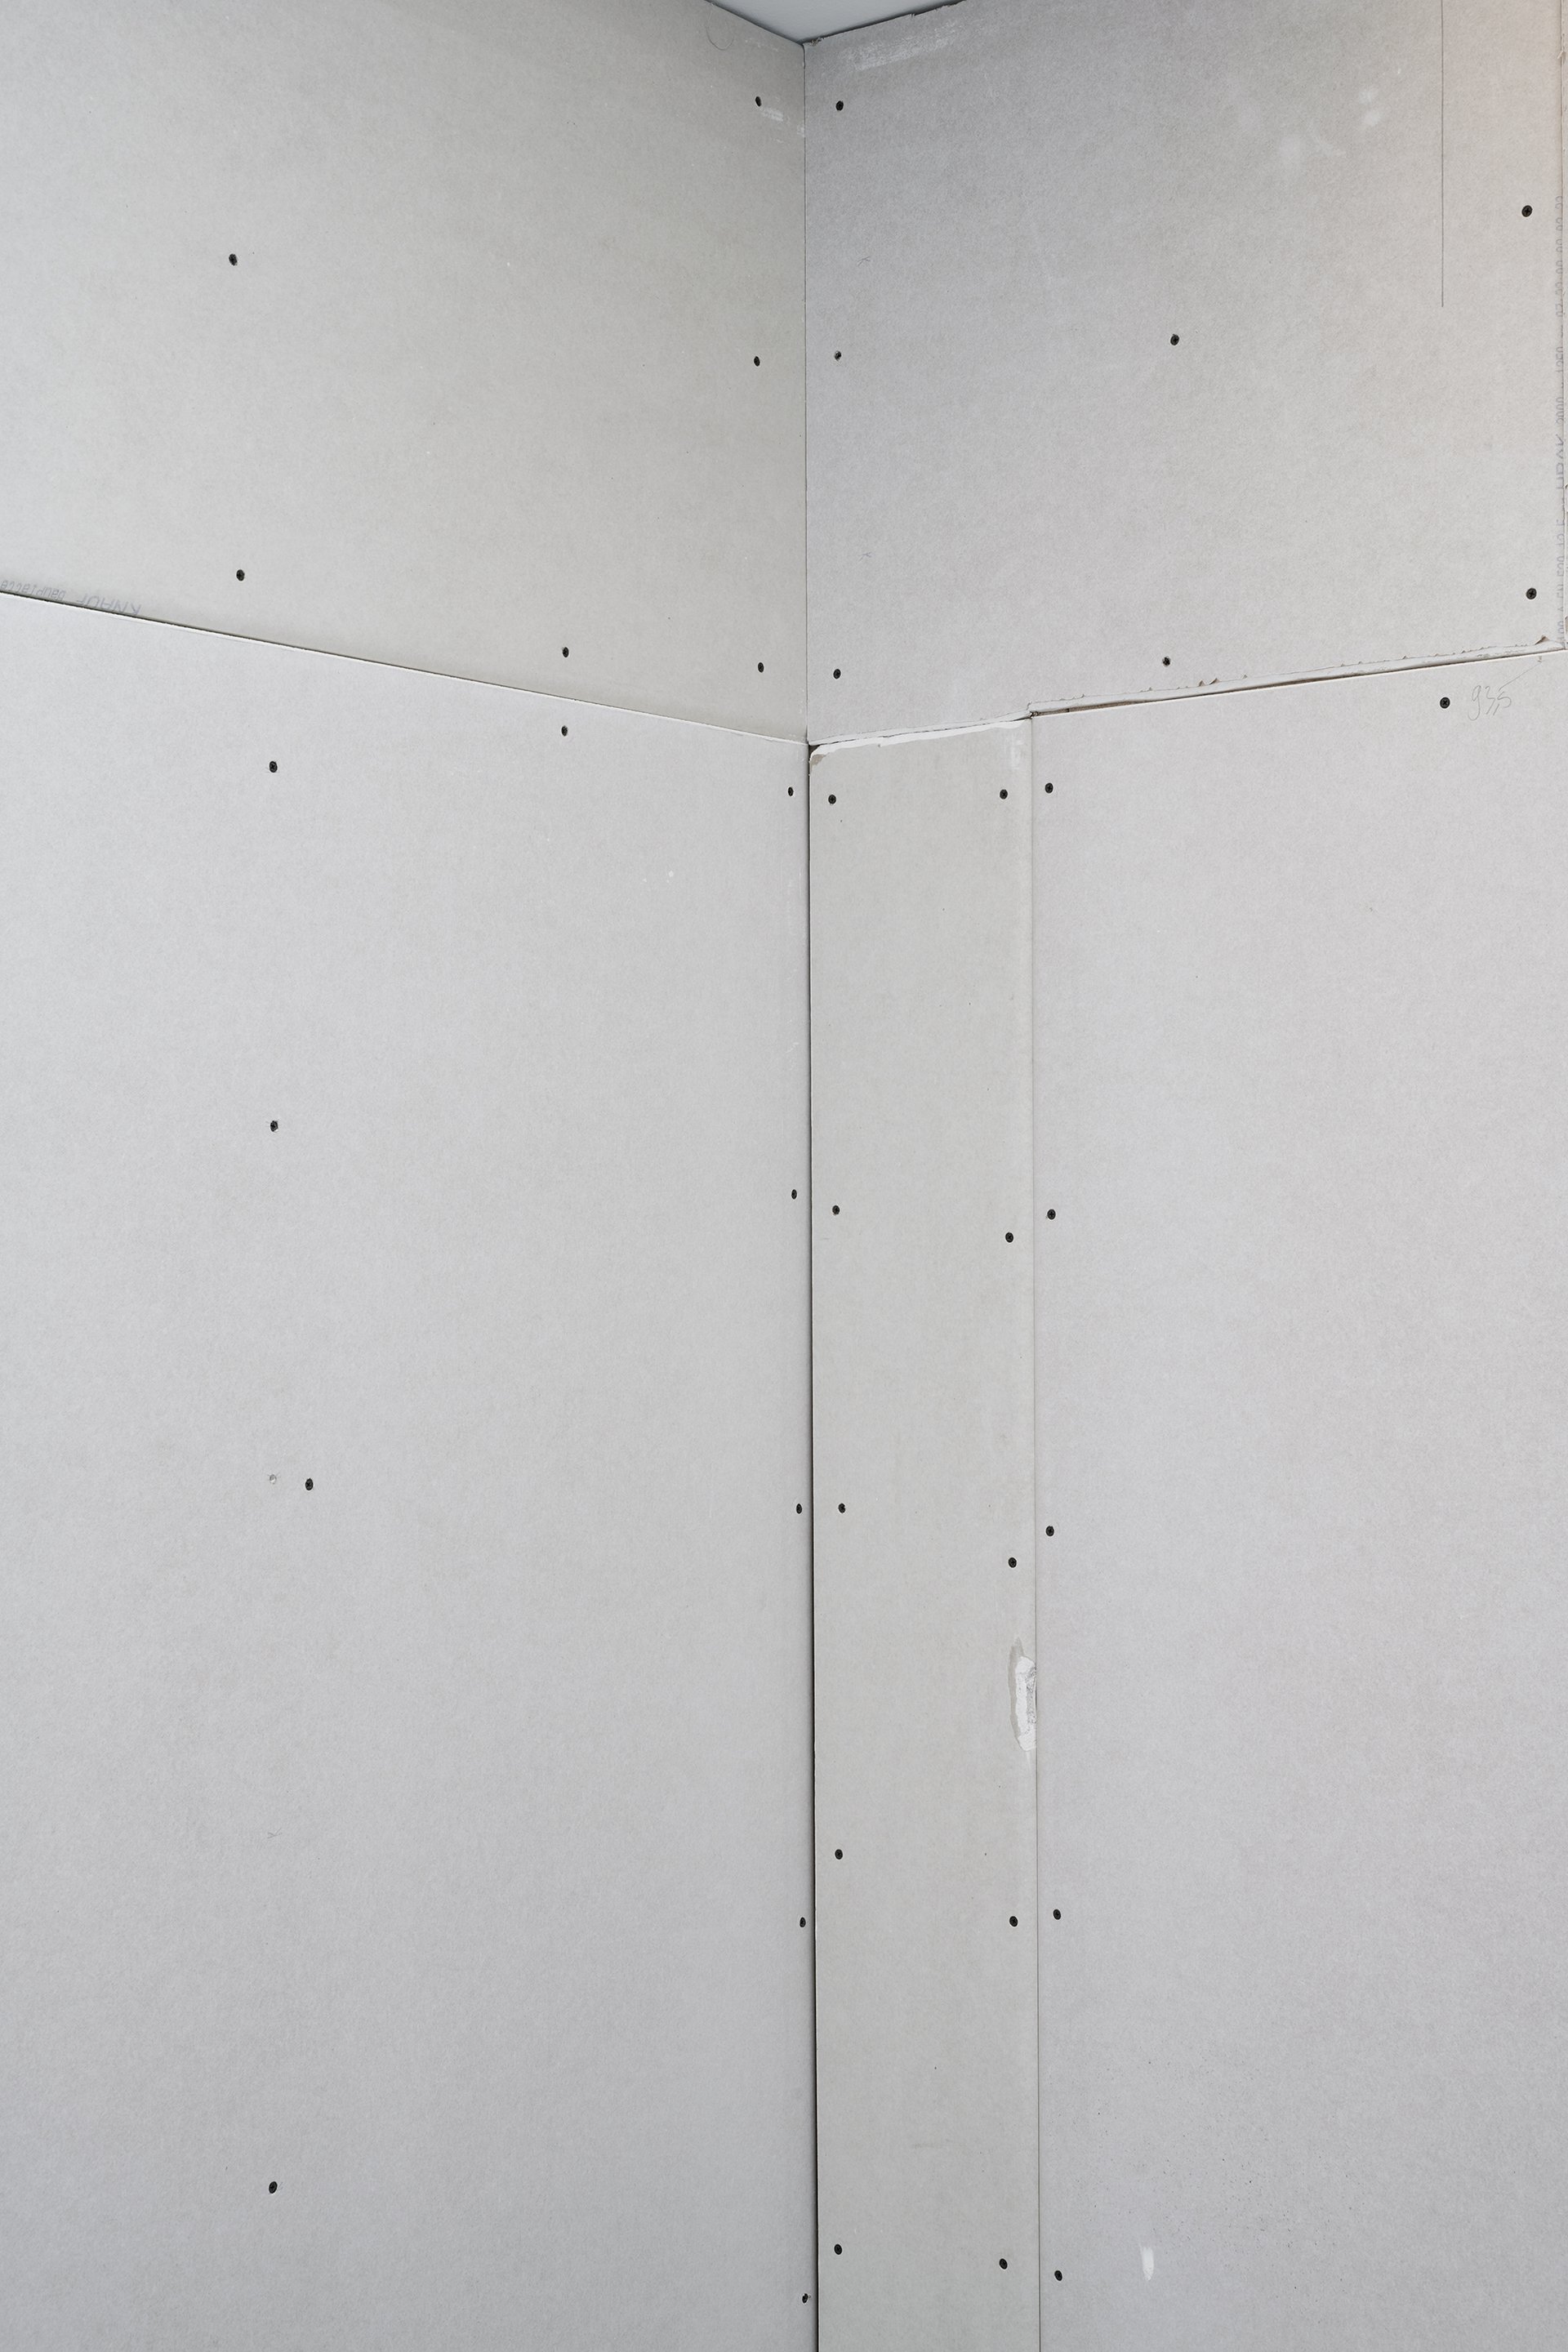 Jason Hirata, Cigarettes and chips in the dark, 2021 – 2022, installation view (detail), Bonner Kunstverein, 2022. Courtesy the artist. Photo: Mareike Tocha.